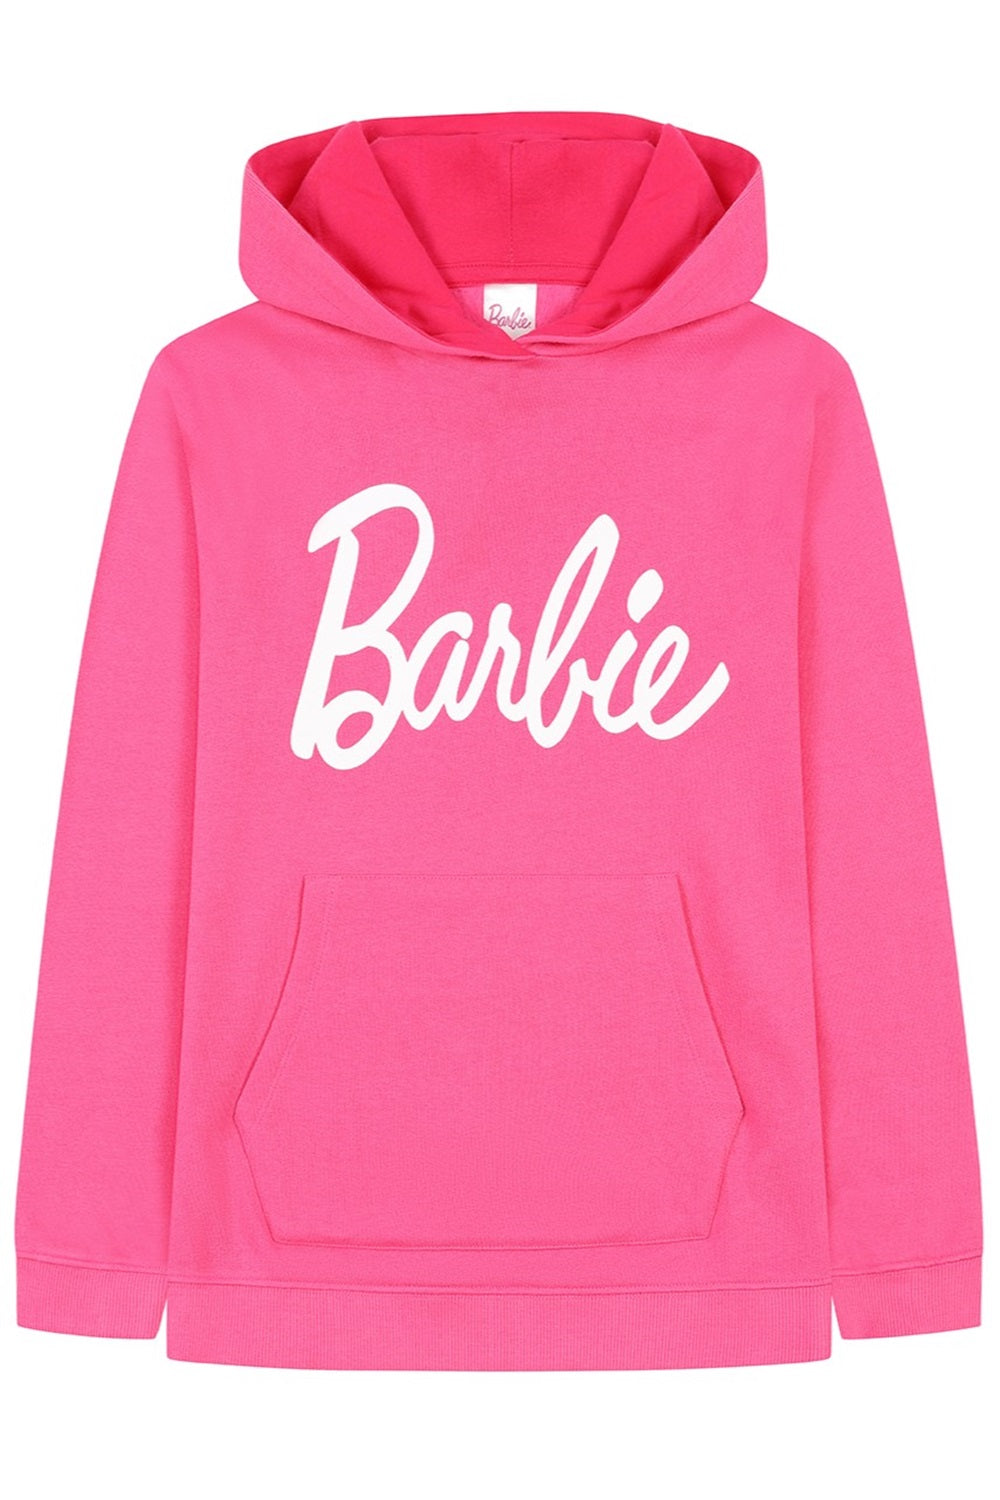 Barbie Girls Pink Hoodie Cotton Kids